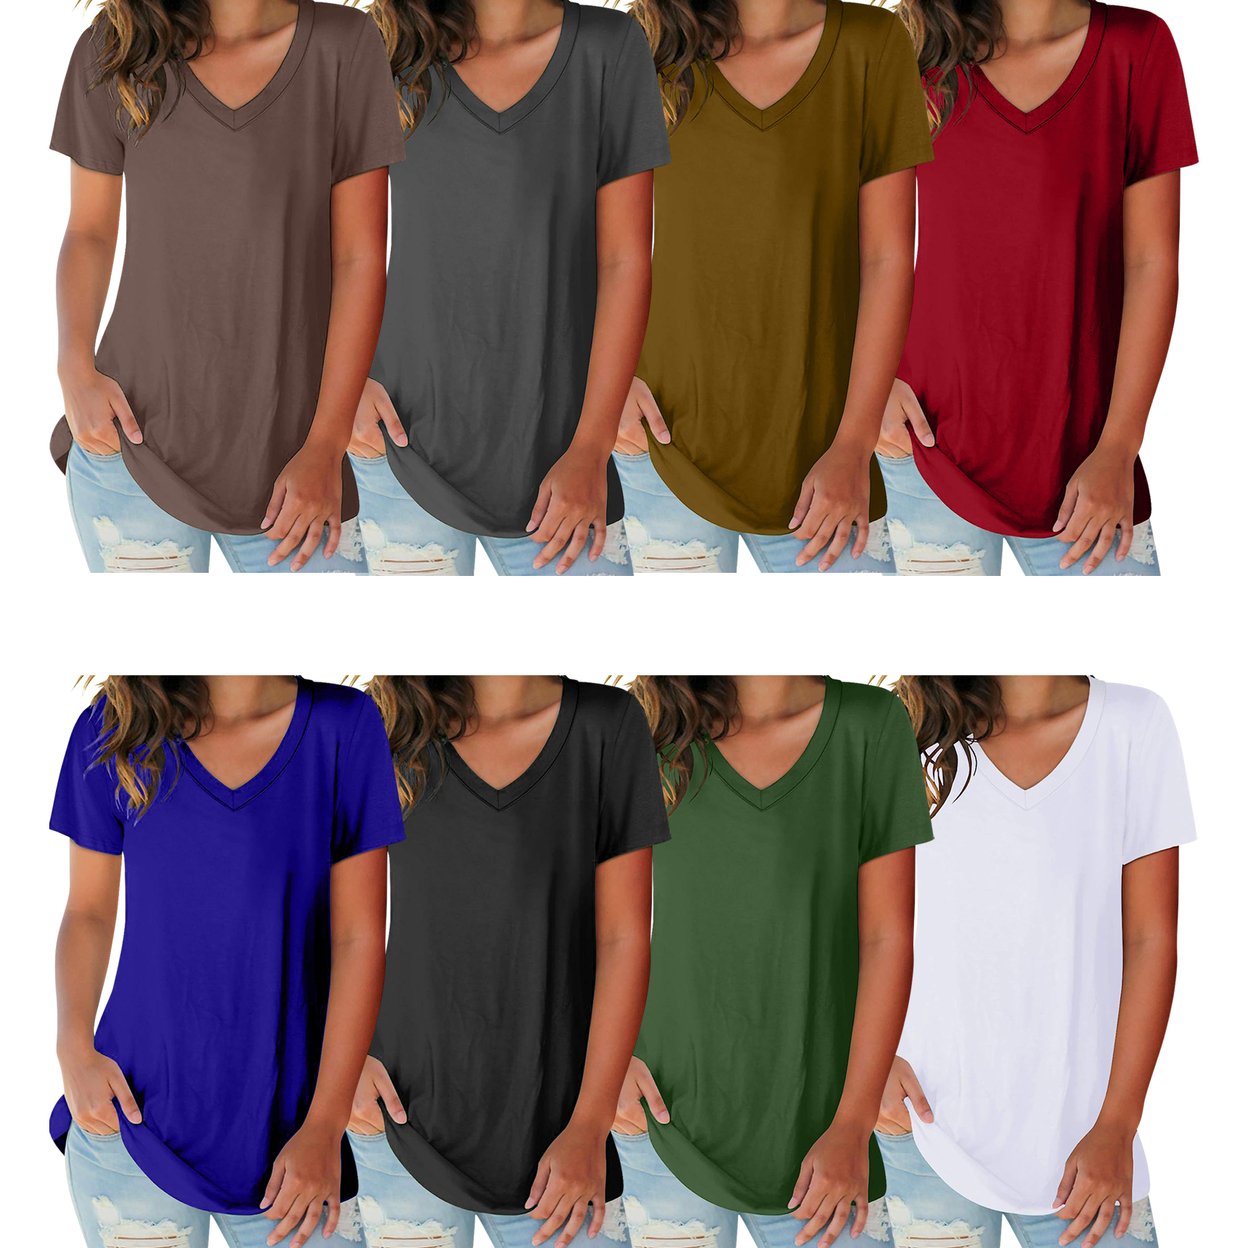 3-Pack: Women's Ultra Soft Smooth Cotton Blend Basic V-Neck Short Sleeve Shirts - Black Navy, Red, X-large